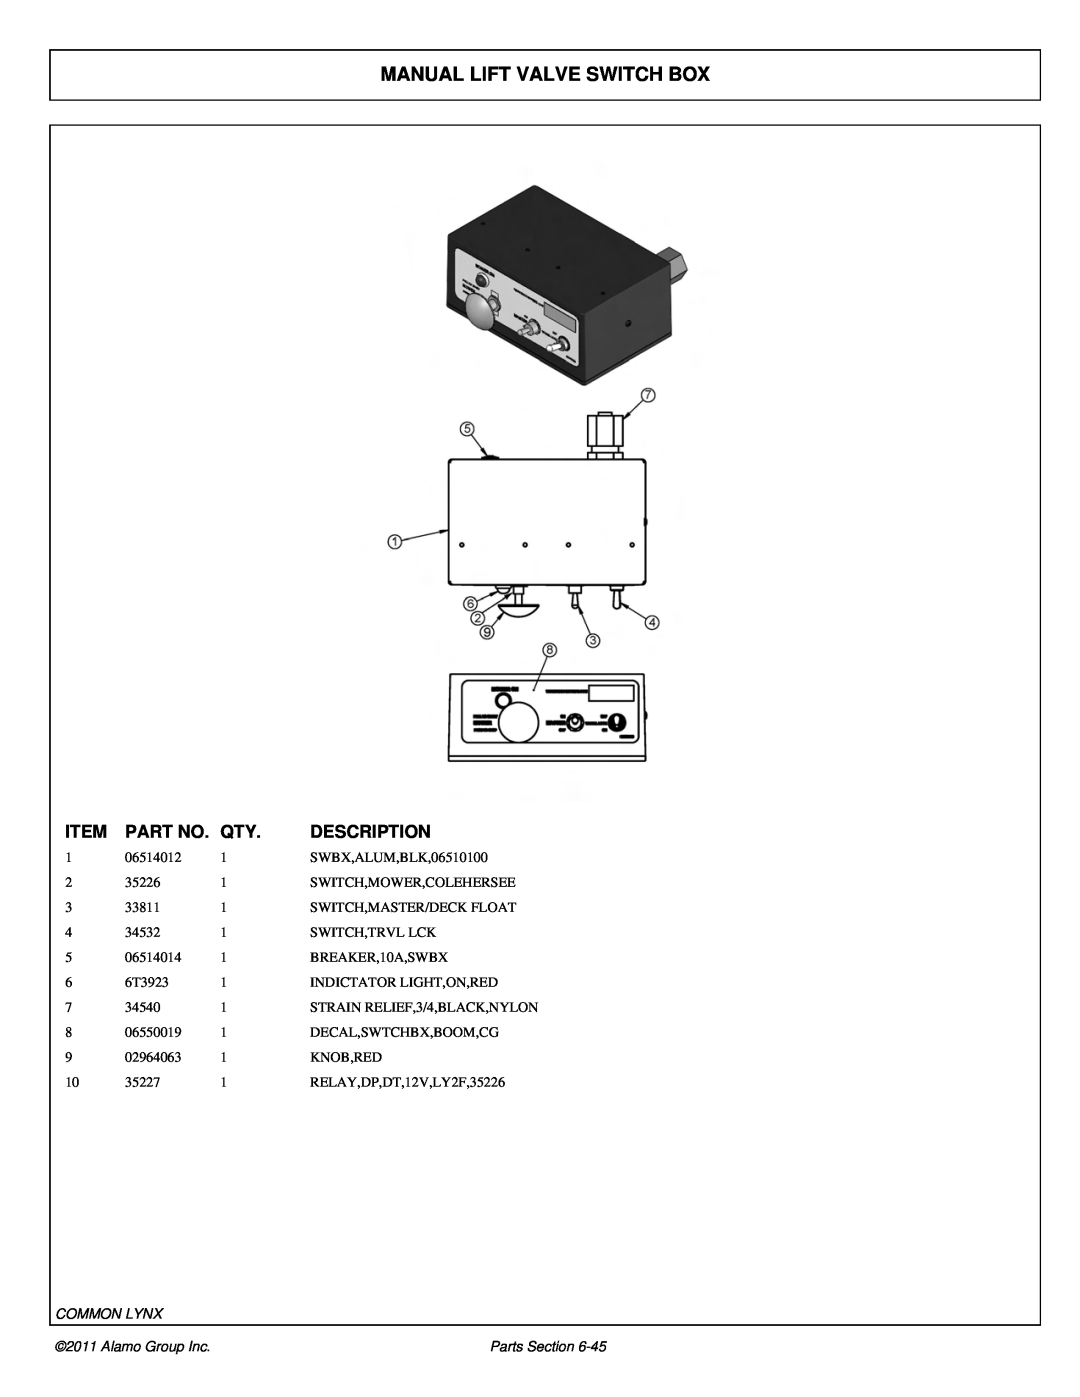 Tiger Products Co., Ltd 5083E manual Manual Lift Valve Switch Box, Item, Part No, Description, Common Lynx, Alamo Group Inc 